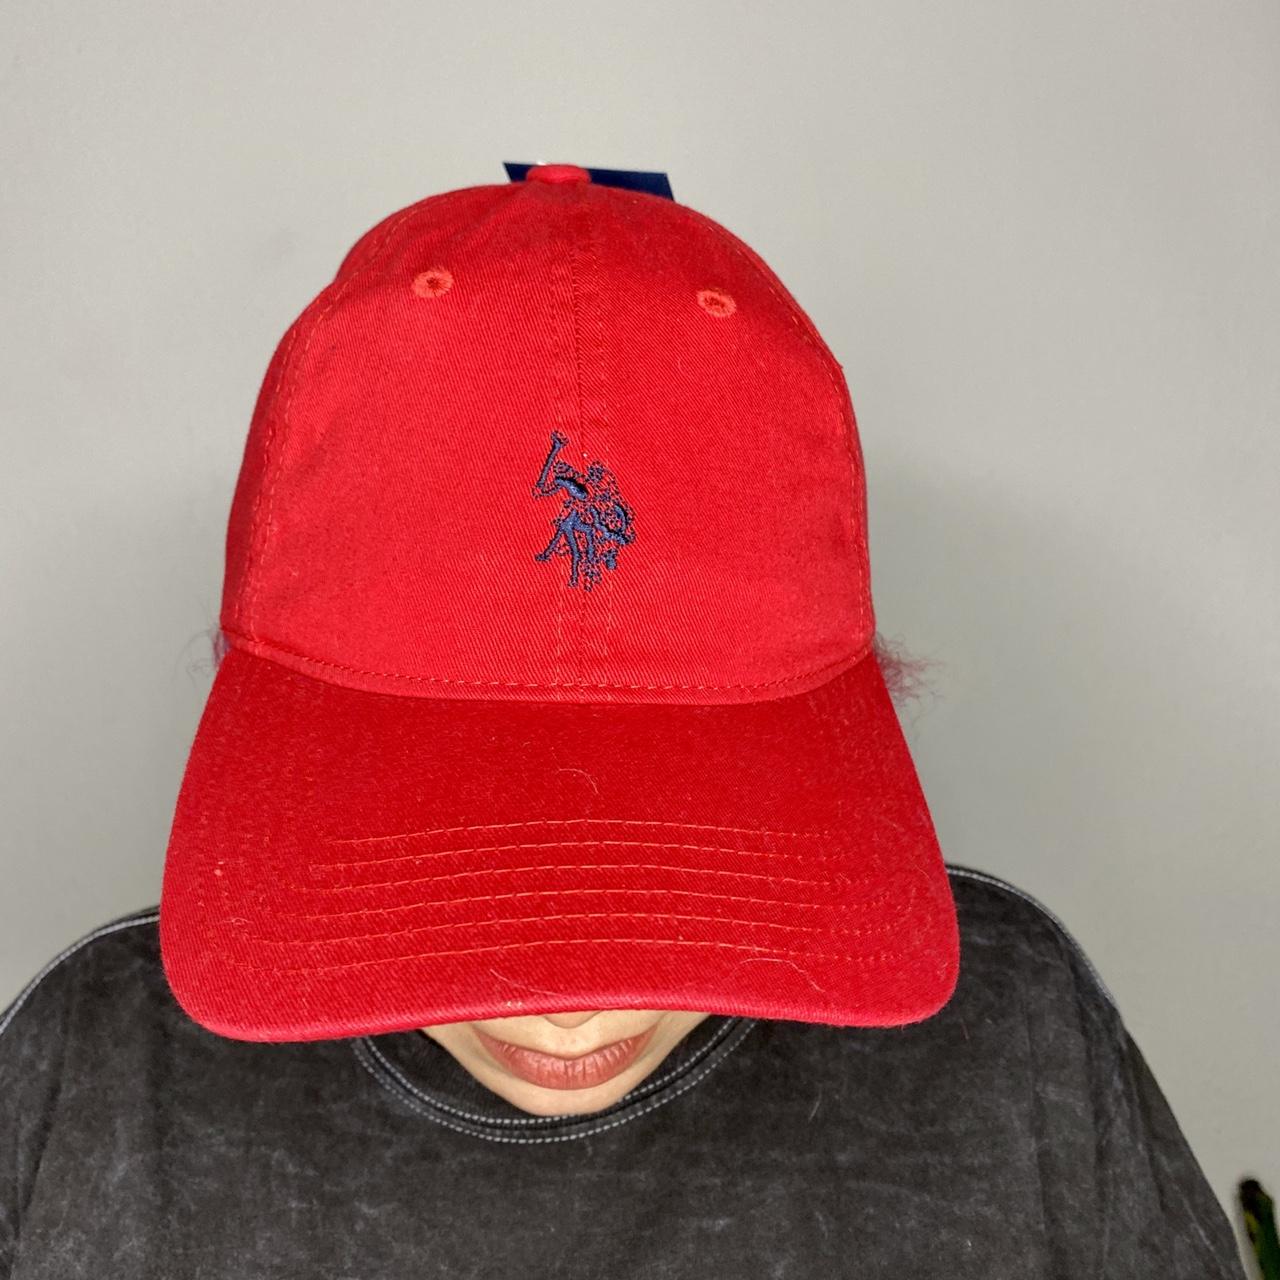 U.S. Polo Assn. Men's Red Hat